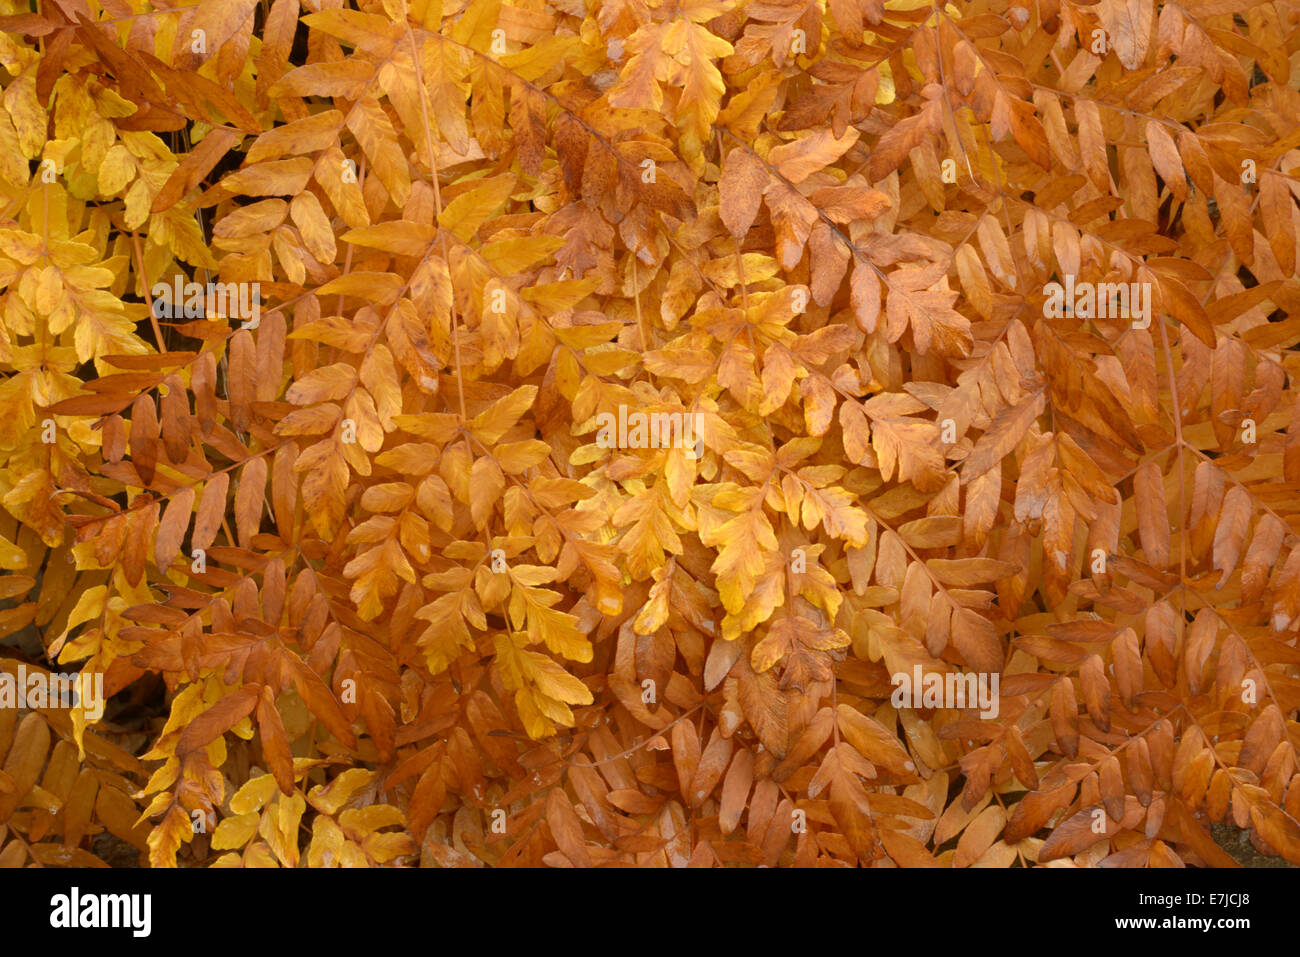 Stati Uniti d'America, Stati Uniti, America, Maine, East Coast, New England, autunno autunno, estate indiana, natura, foresta, foglie Foto Stock